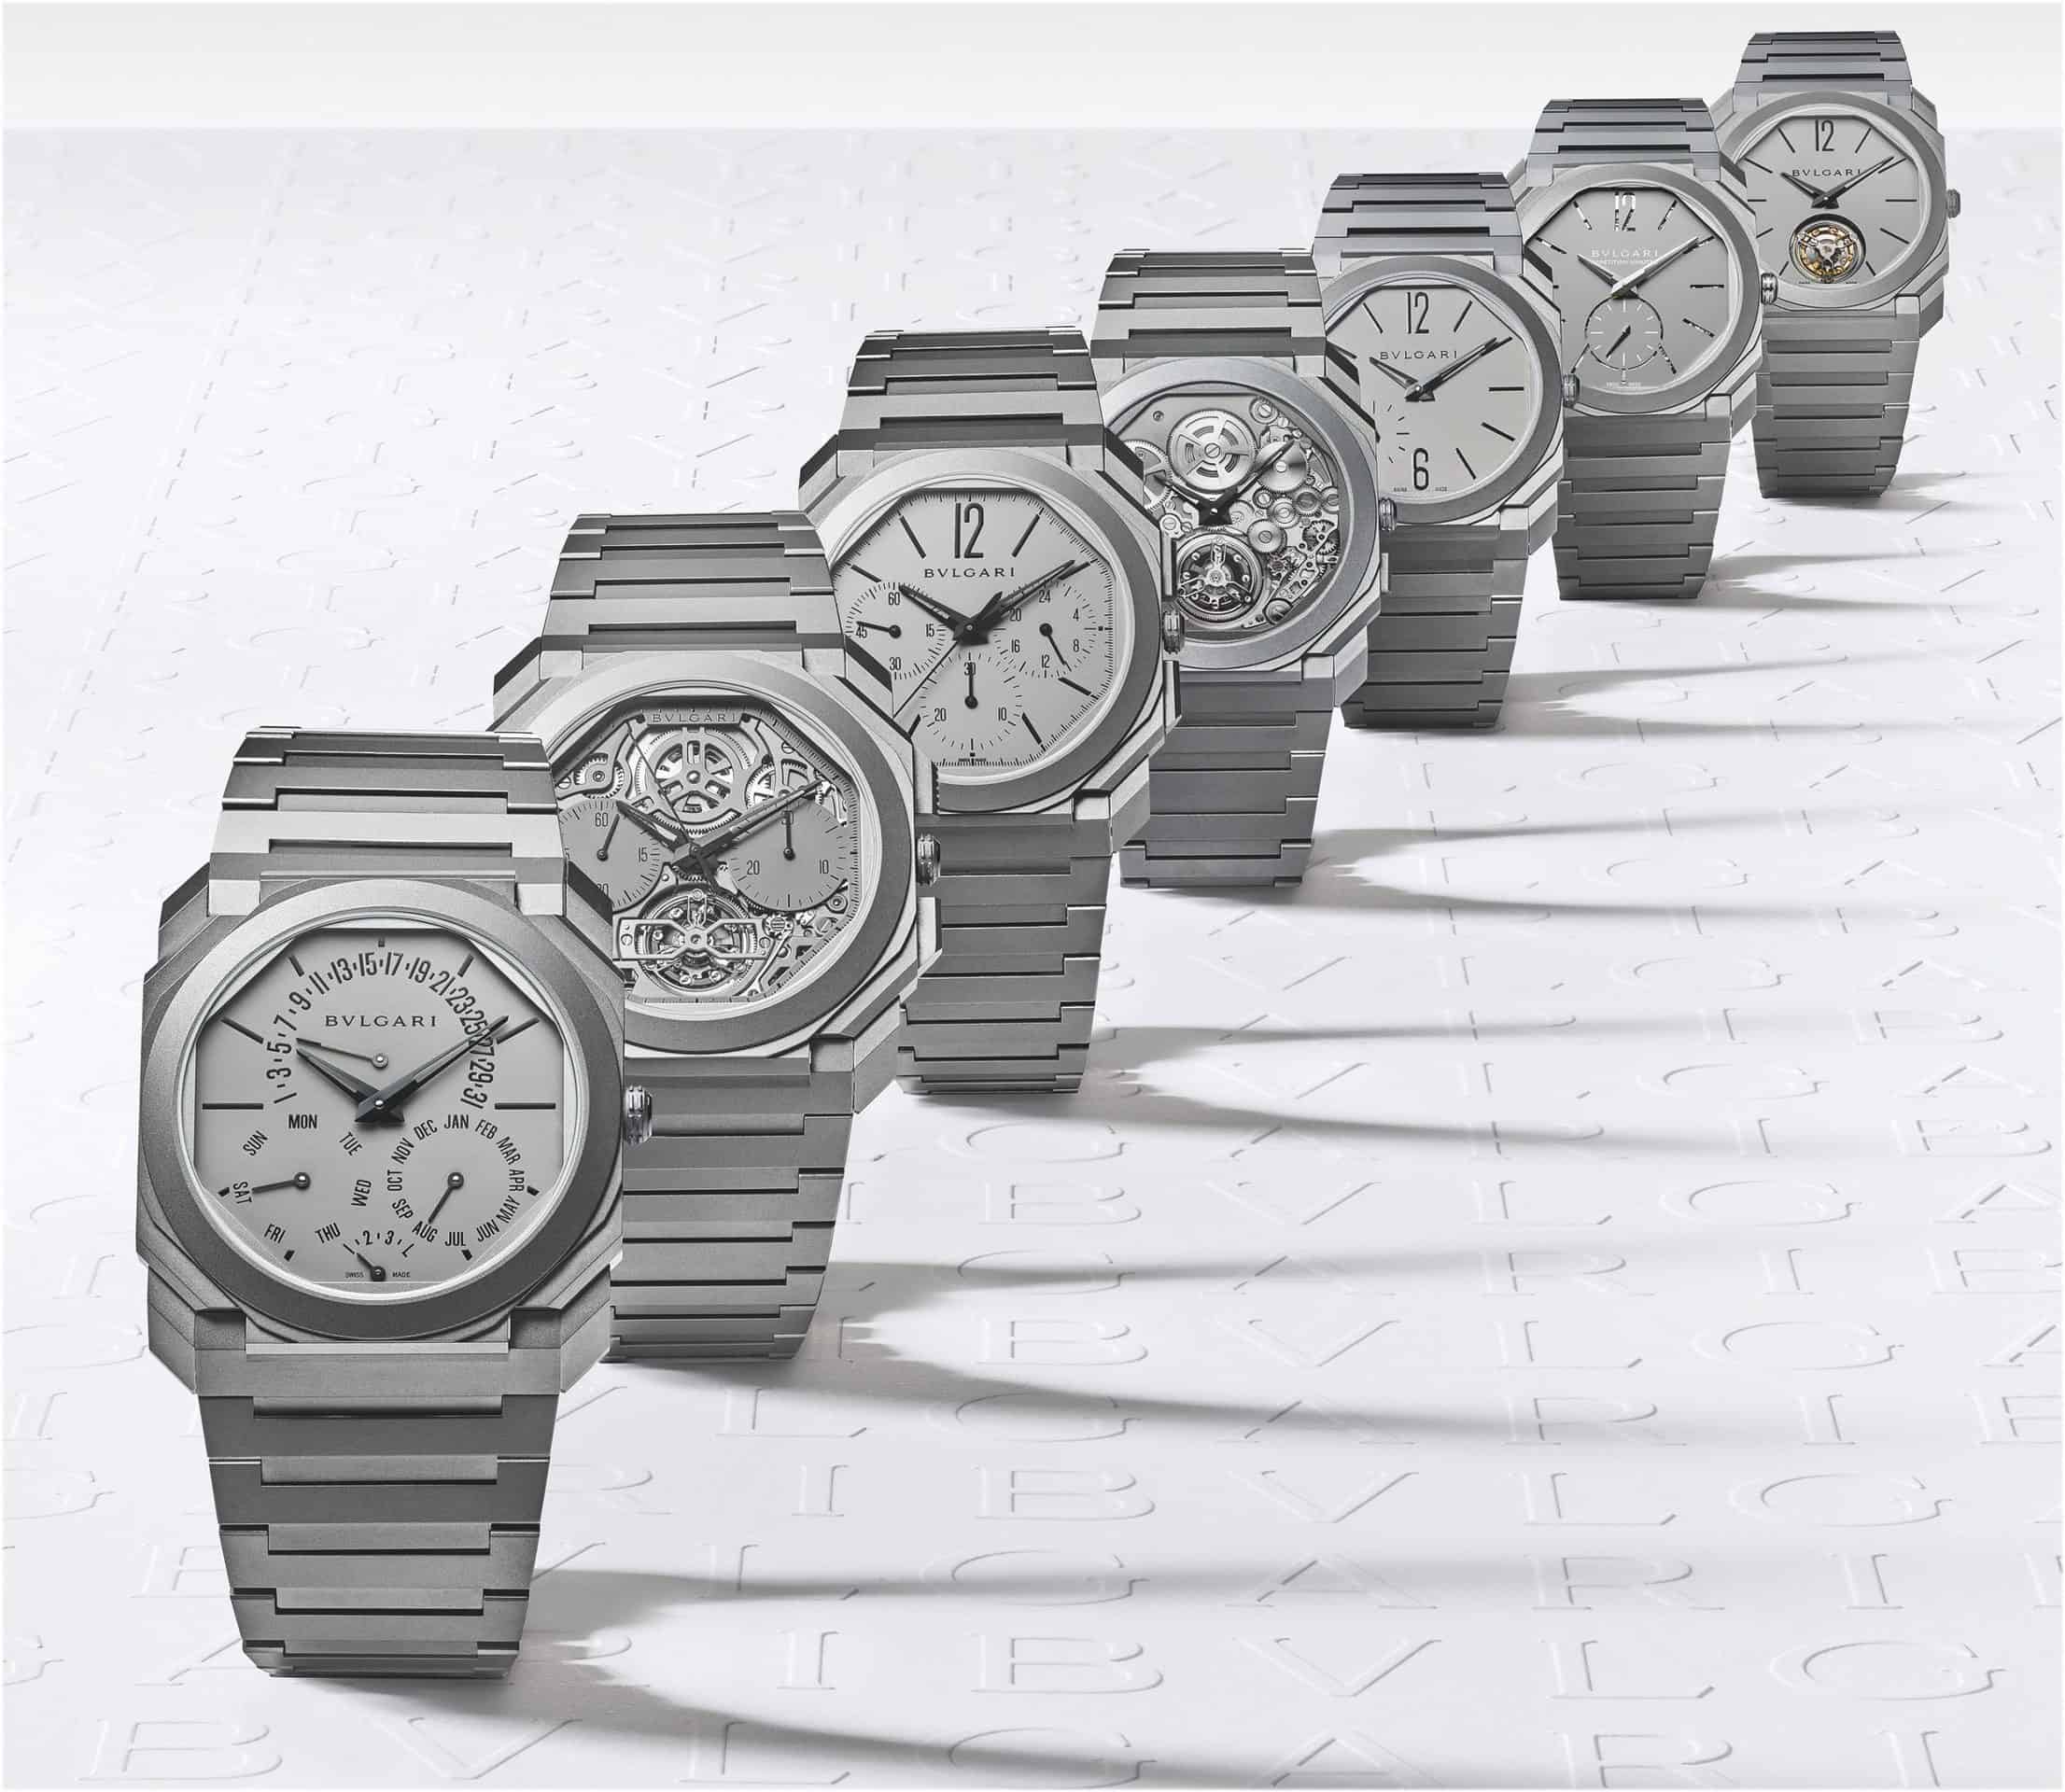 Weltrekorde im flachen Uhrenbau einiger Bulgari Octo Finissimo Modelle